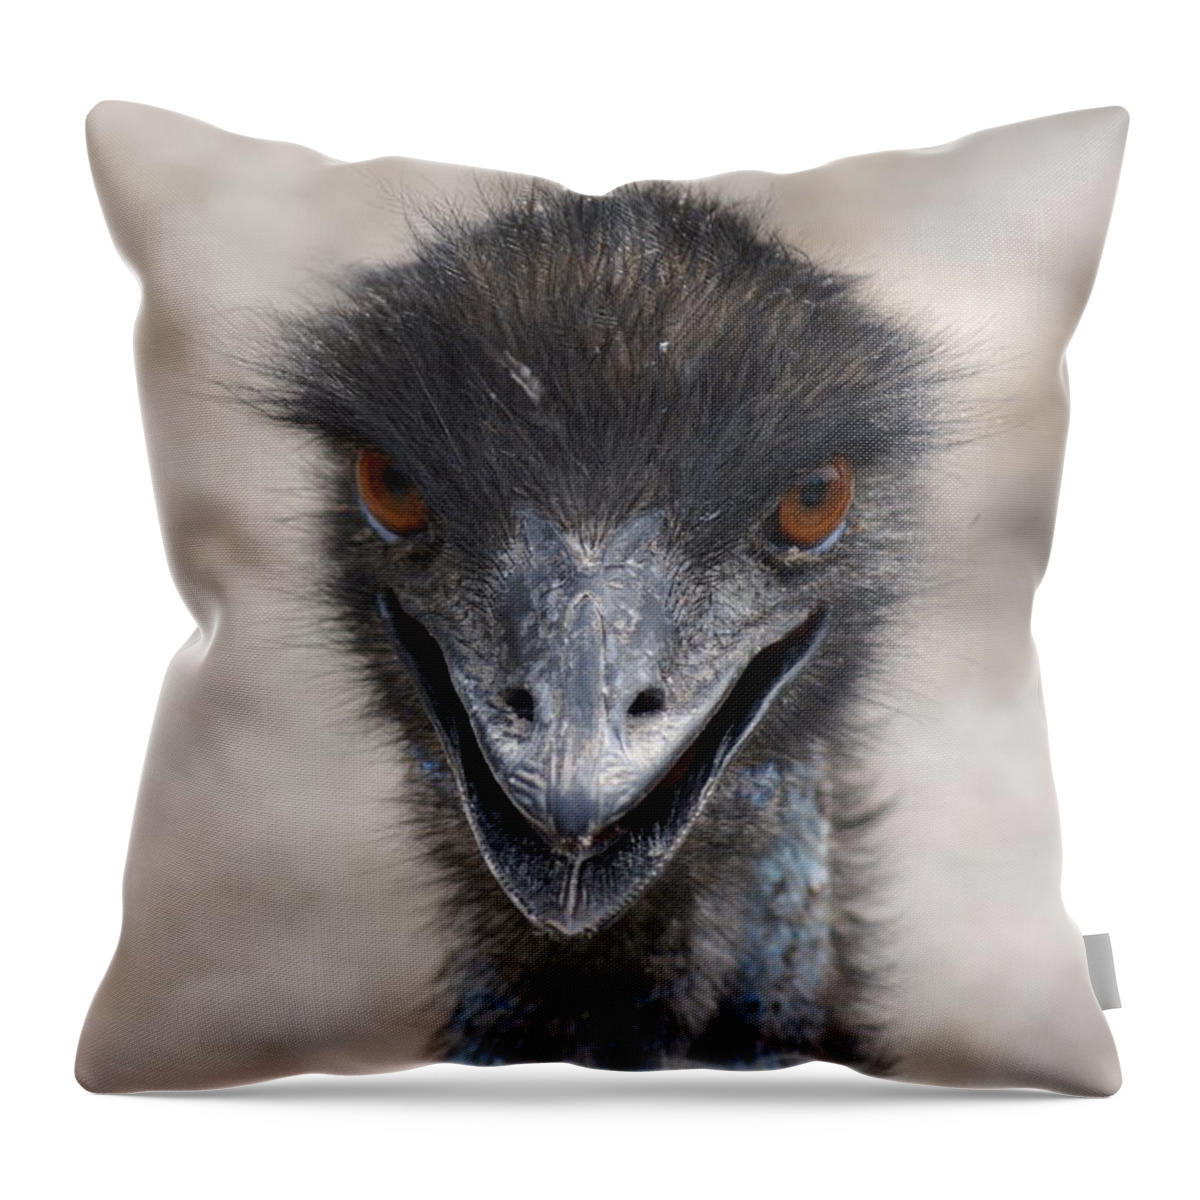  Throw Pillow featuring the photograph Emu Gaze by Heather E Harman